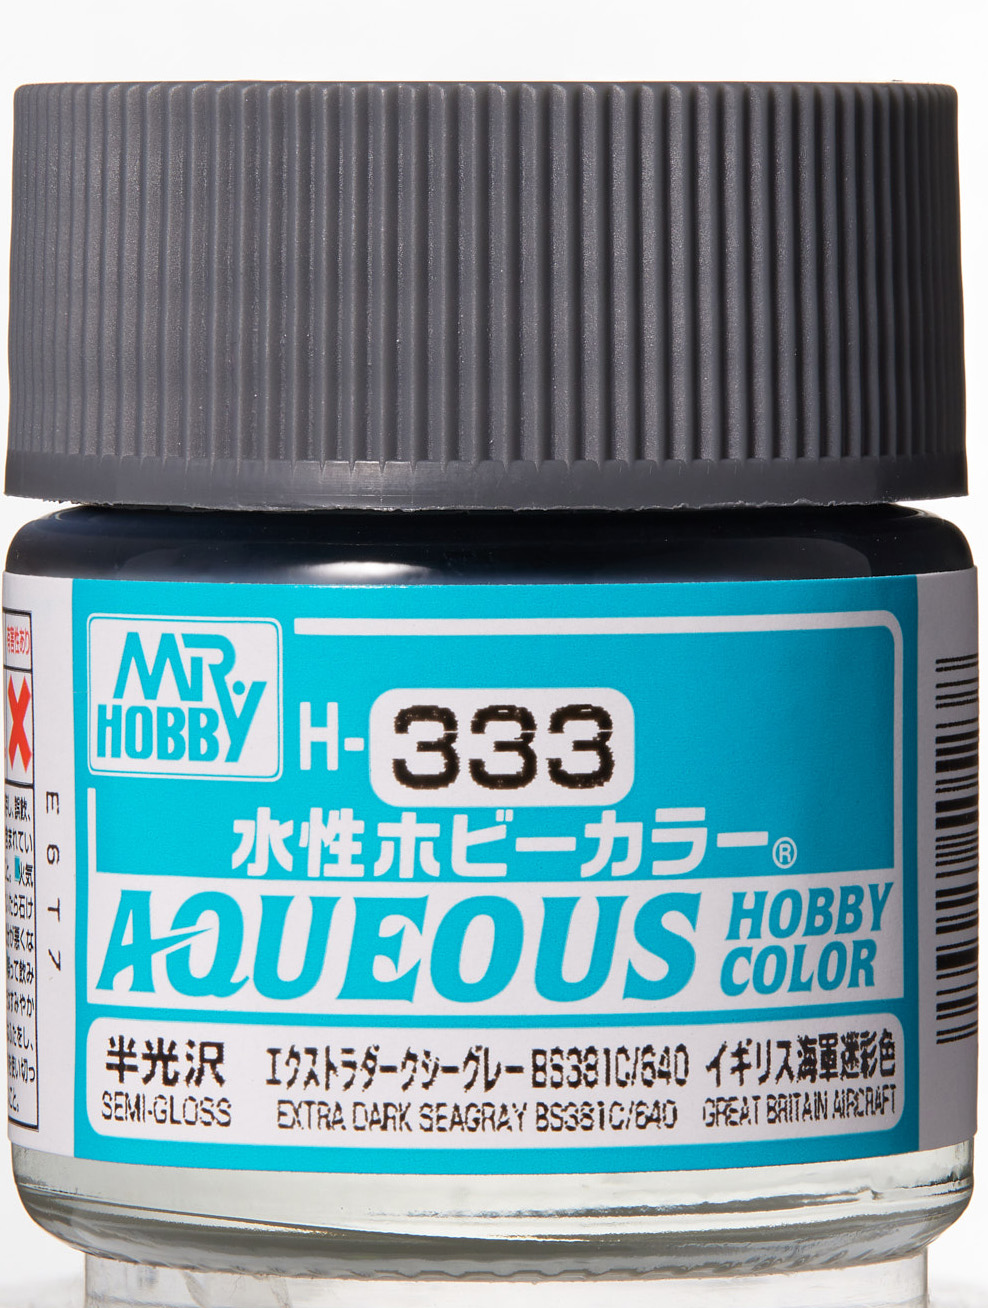 Mr. Aqueous Hobby Color - Extra Dark Seagrey BS381C/640 - H333 - Seegrau Extra Dunkel BS381C/640 